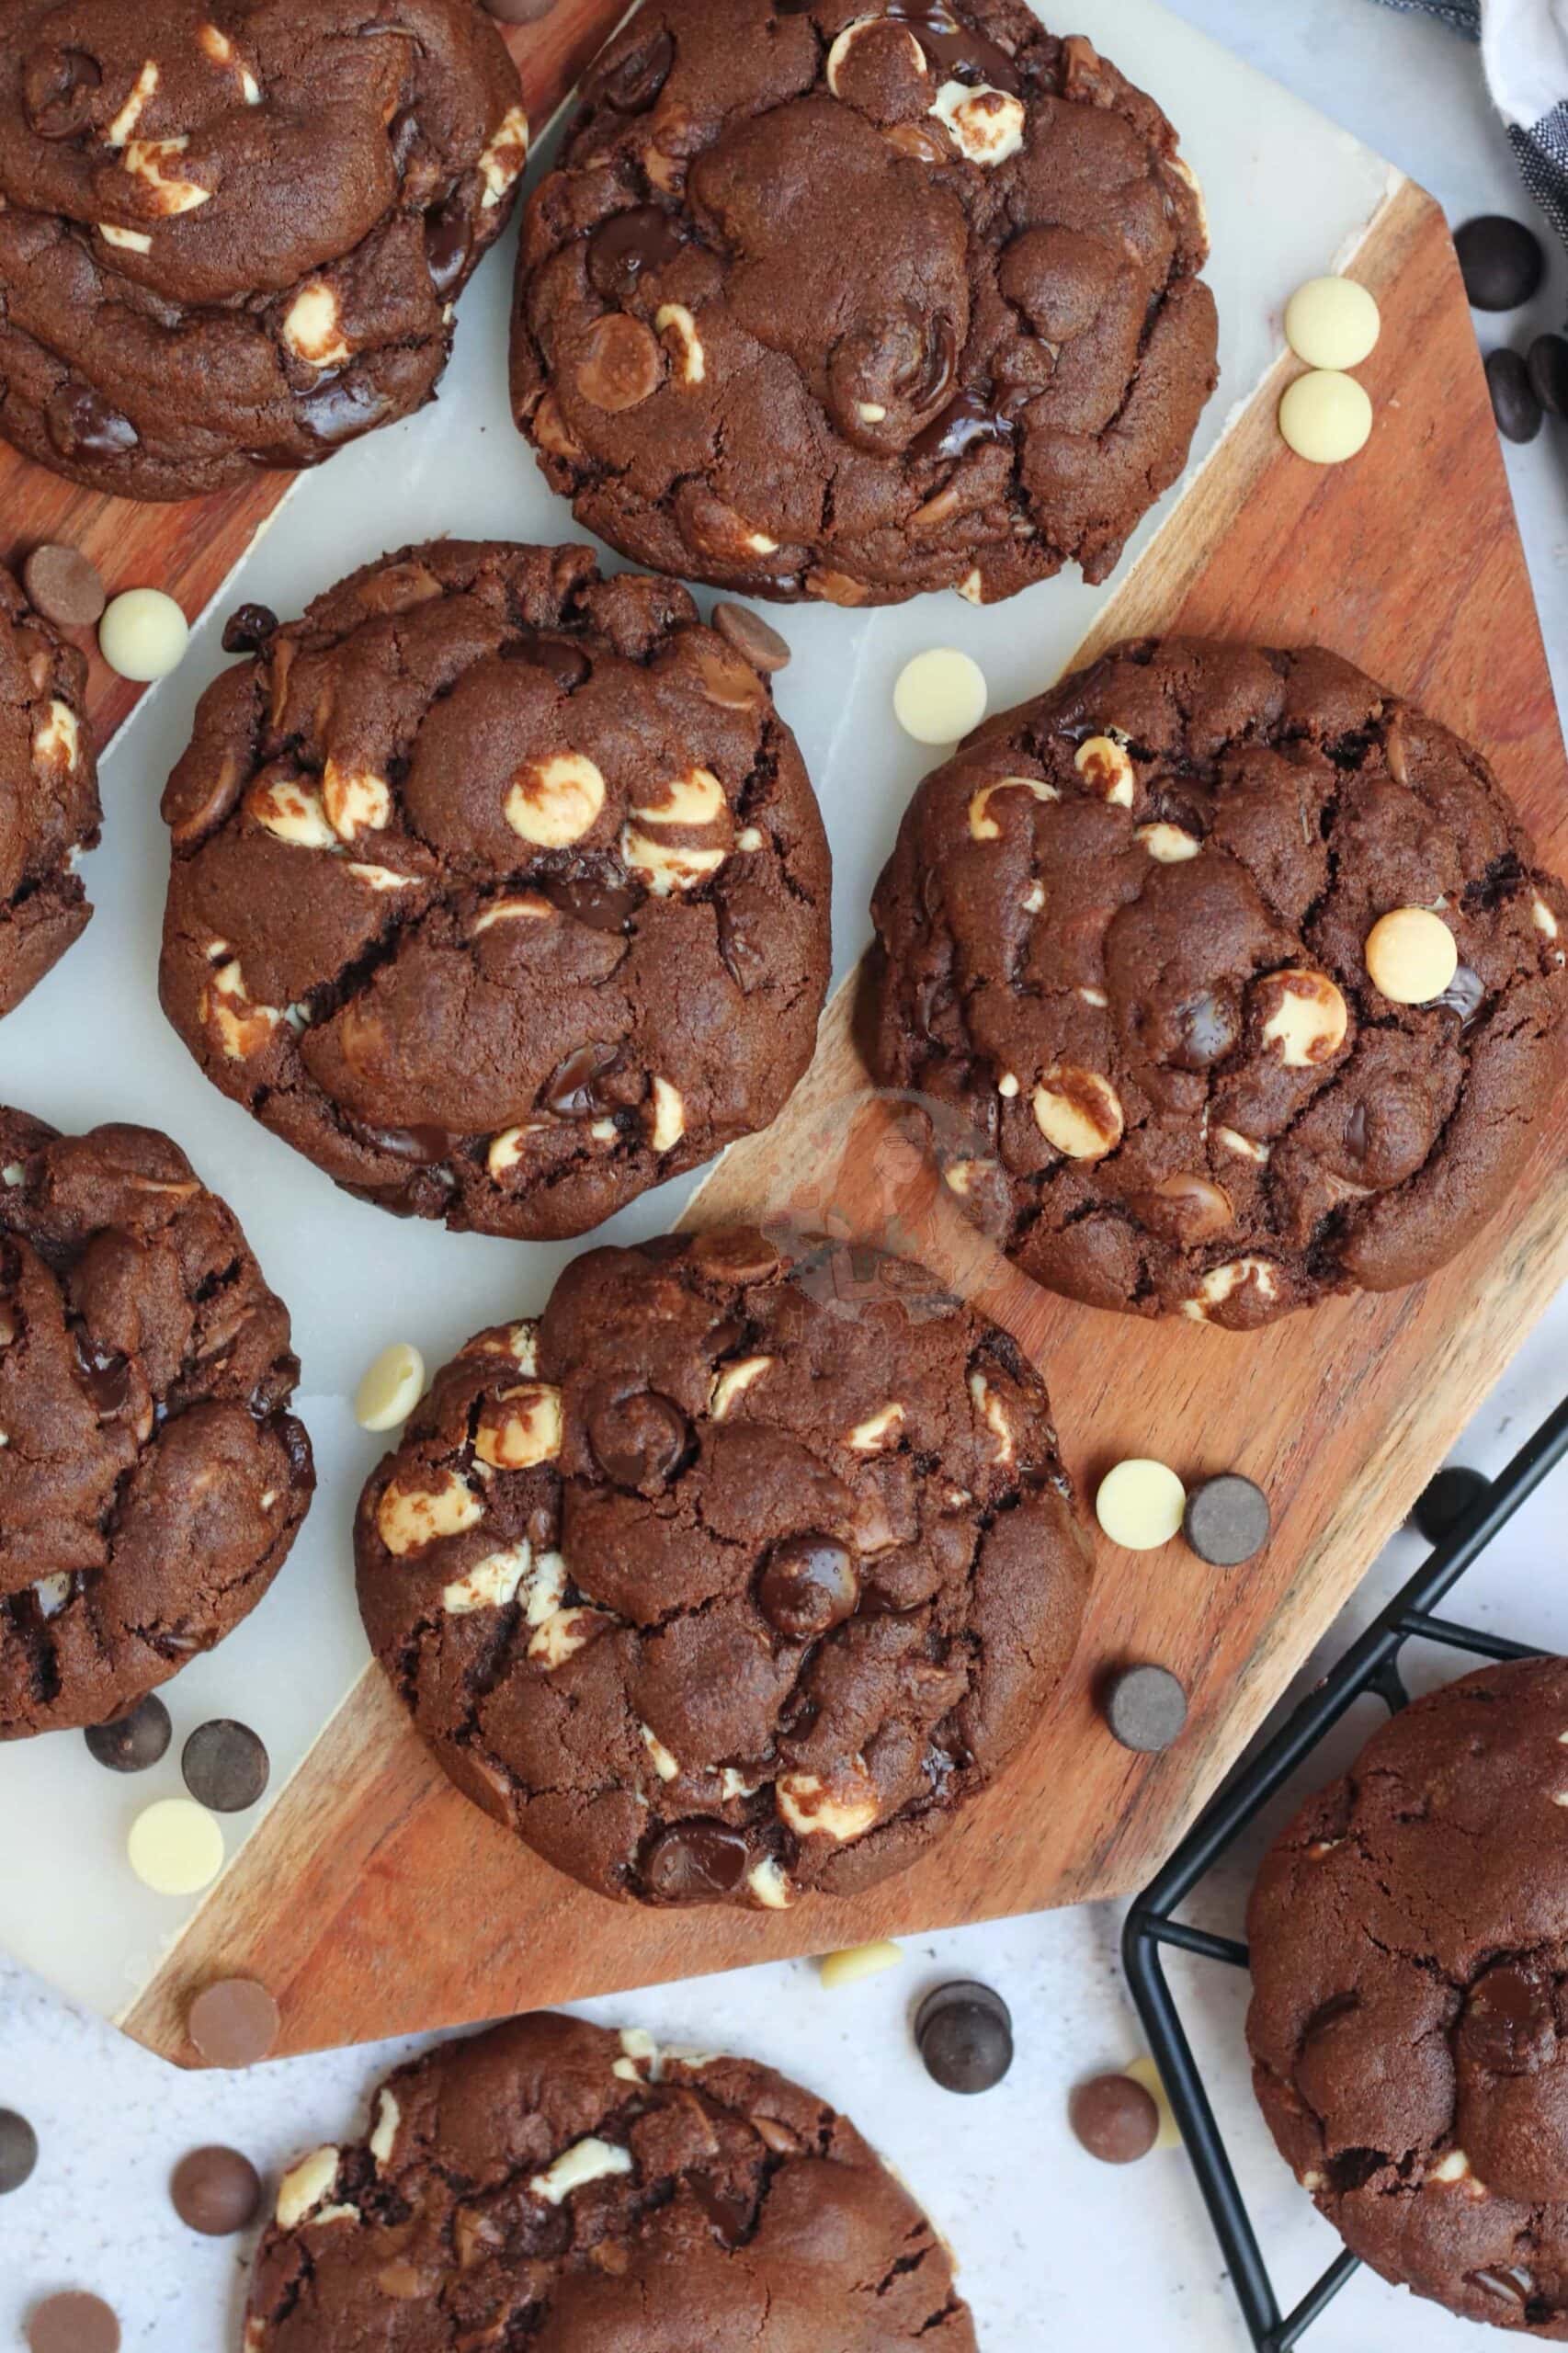 Soft Baked Classic Cookie: Oatmeal Raisin, Double Chocolate w/Hershey's &  Macadamia Nut w/Hershey's 